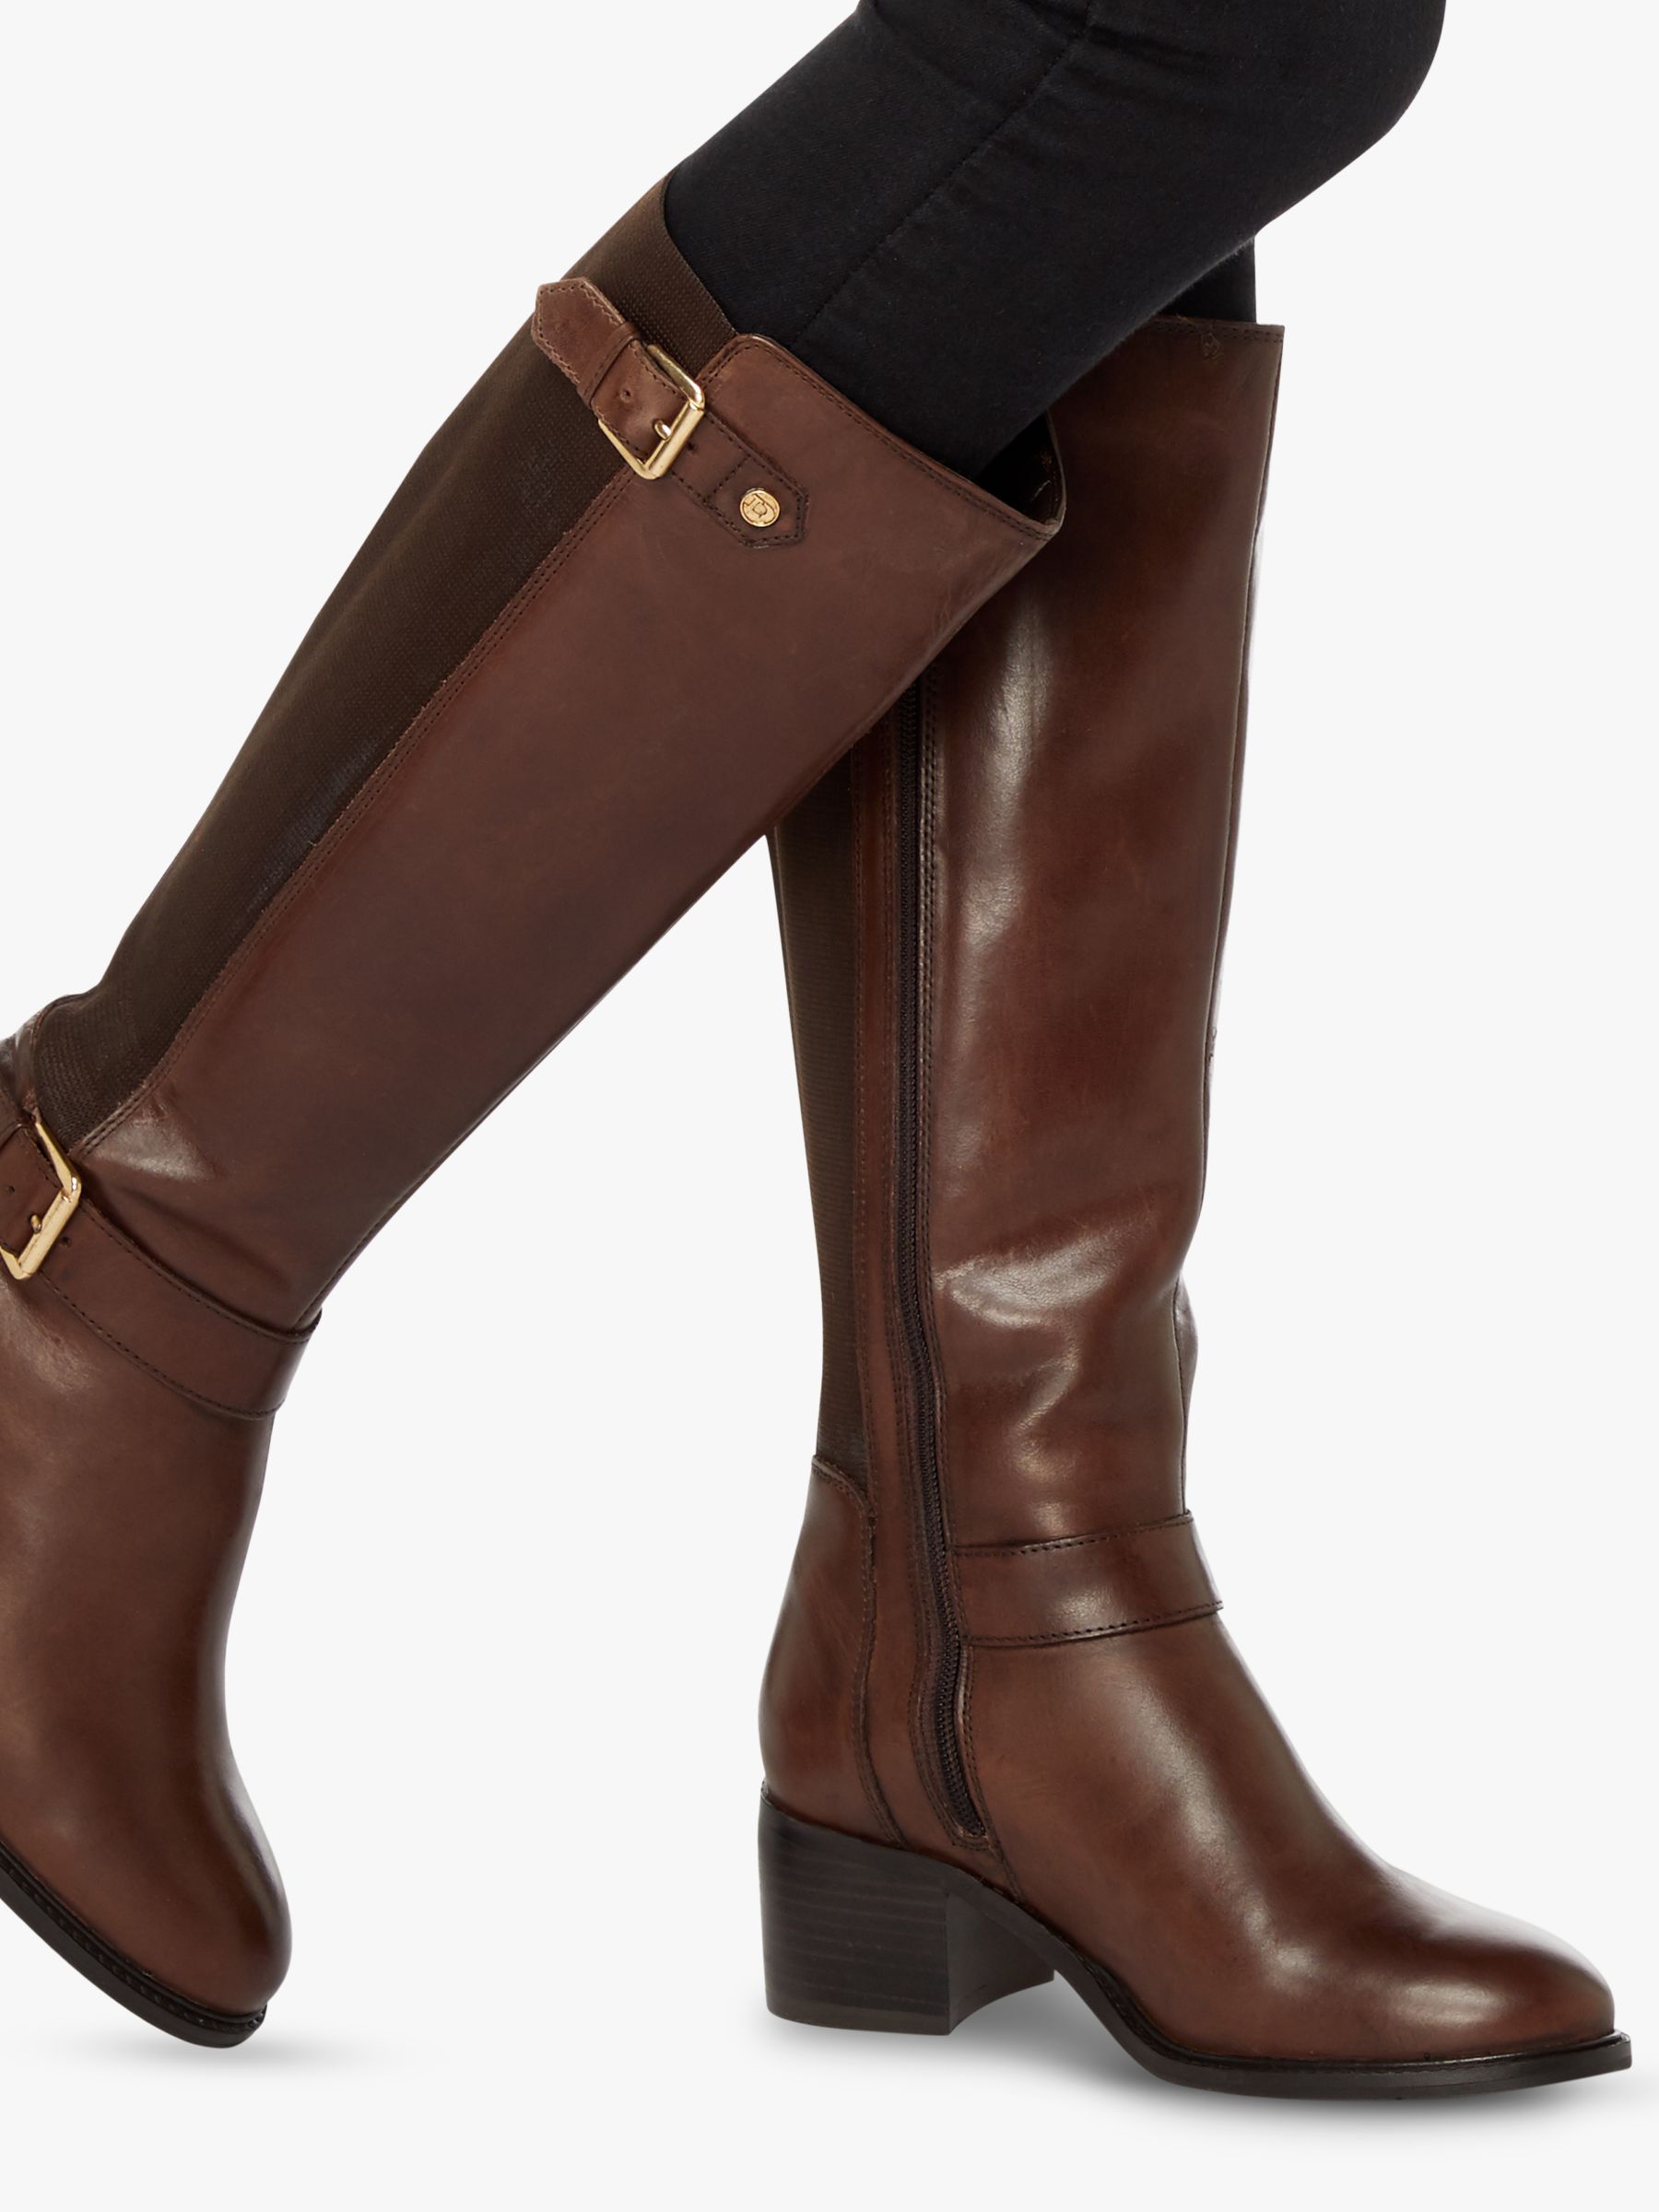 Dune Tildaa Knee High Boots, Dark Brown Leather, 3